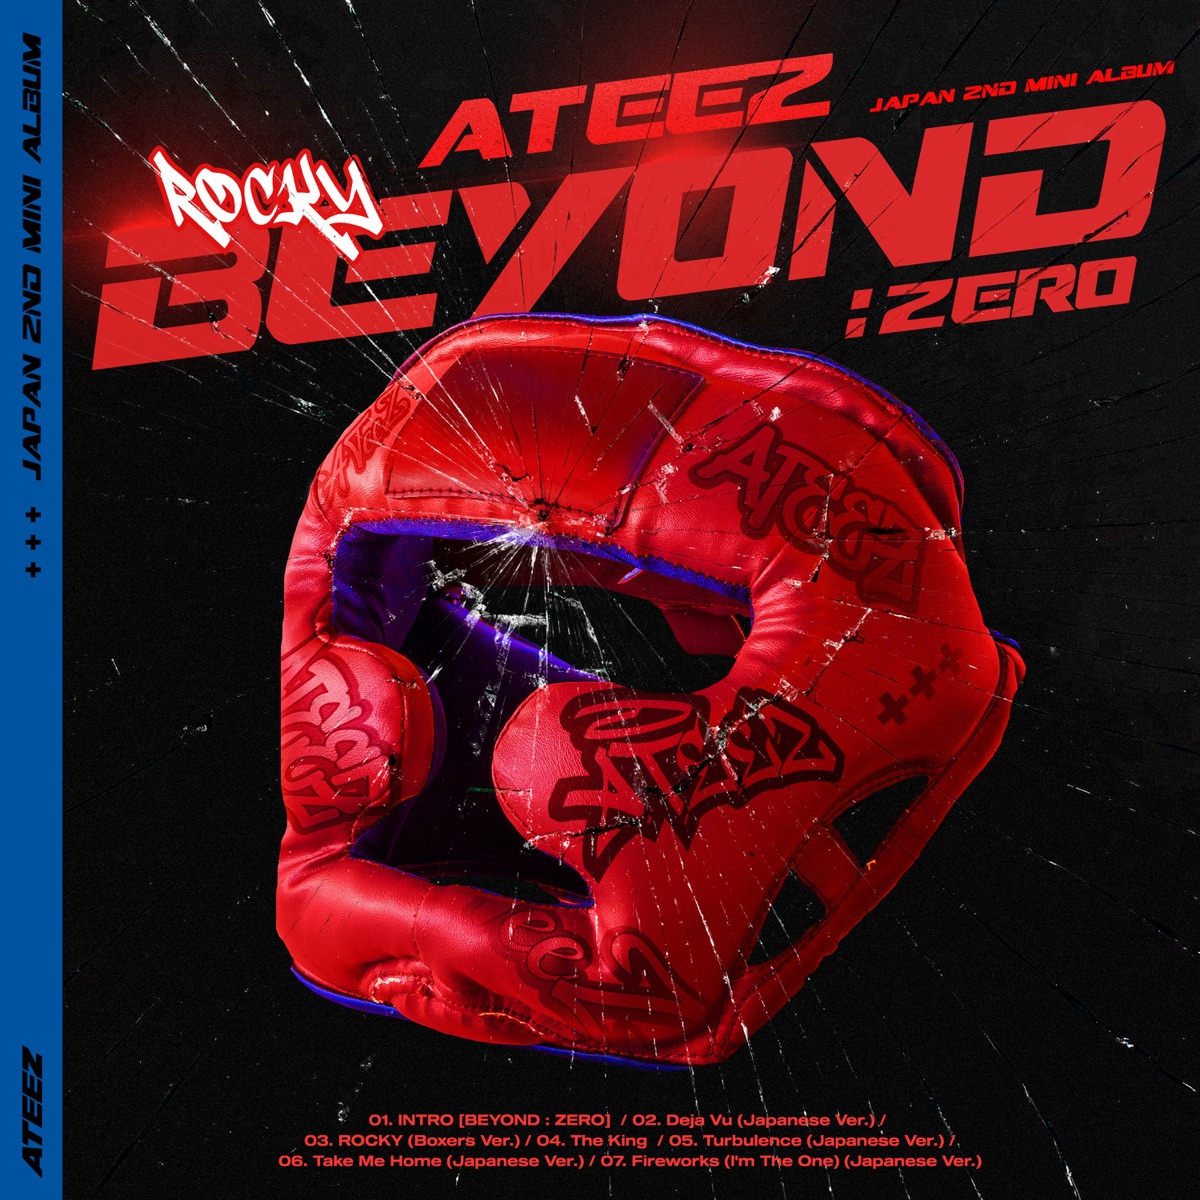 『ATEEZ - Turbulence (Japanese Ver.)』収録の『BEYOND : ZERO』ジャケット